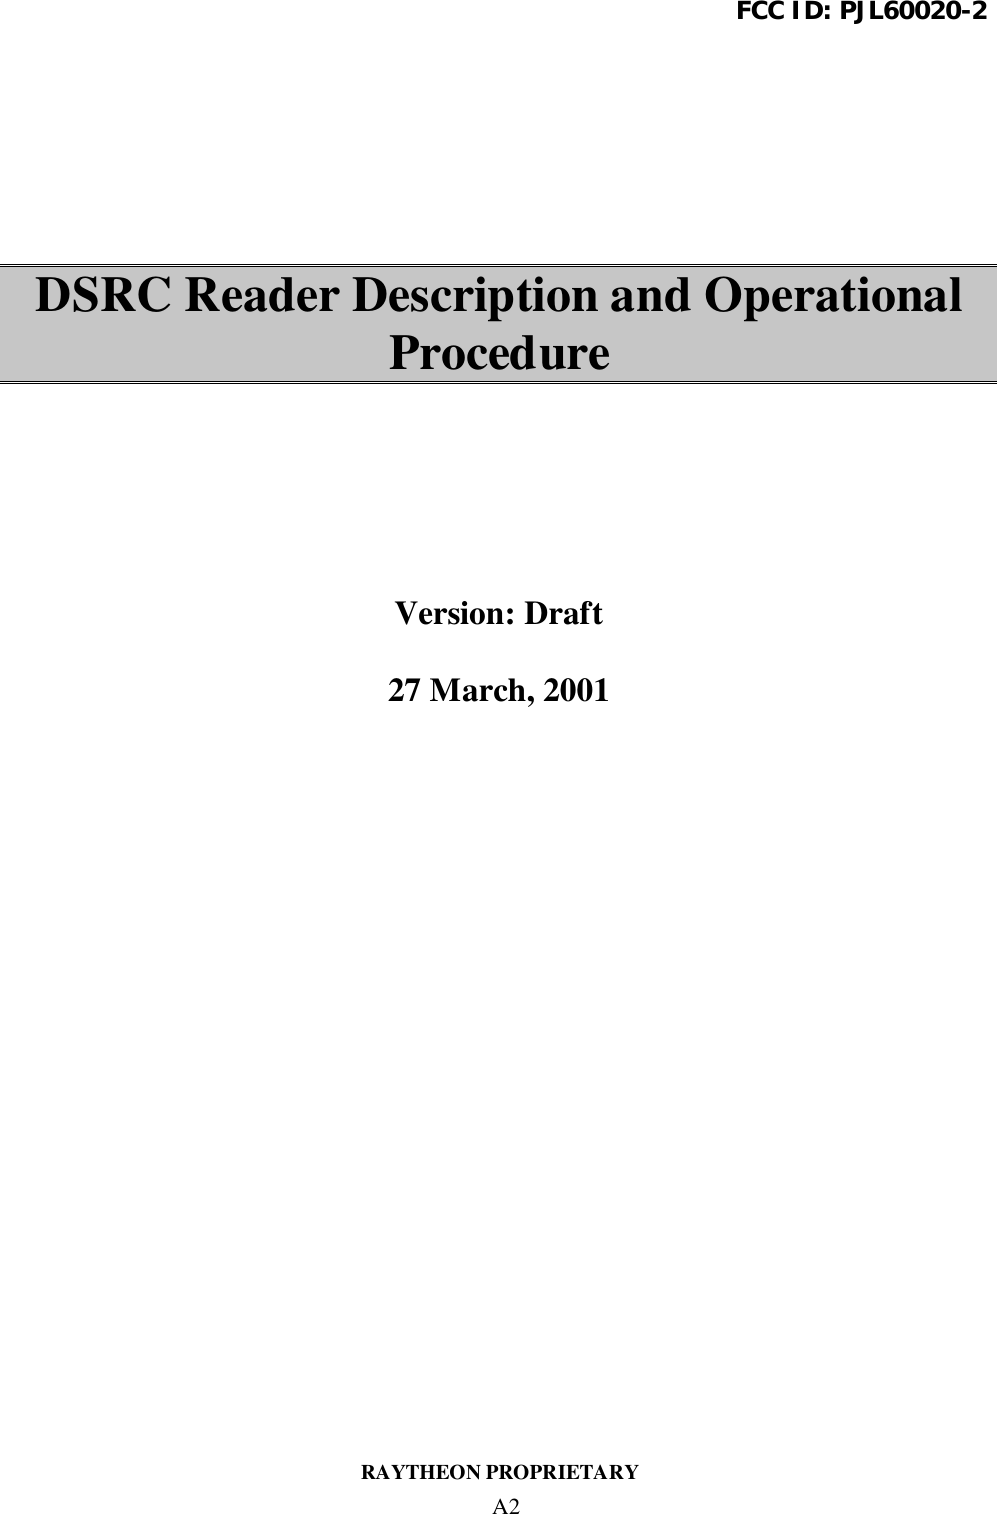 FCC ID: PJL60020-2RAYTHEON PROPRIETARYA2DSRC Reader Description and OperationalProcedureVersion: Draft27 March, 2001